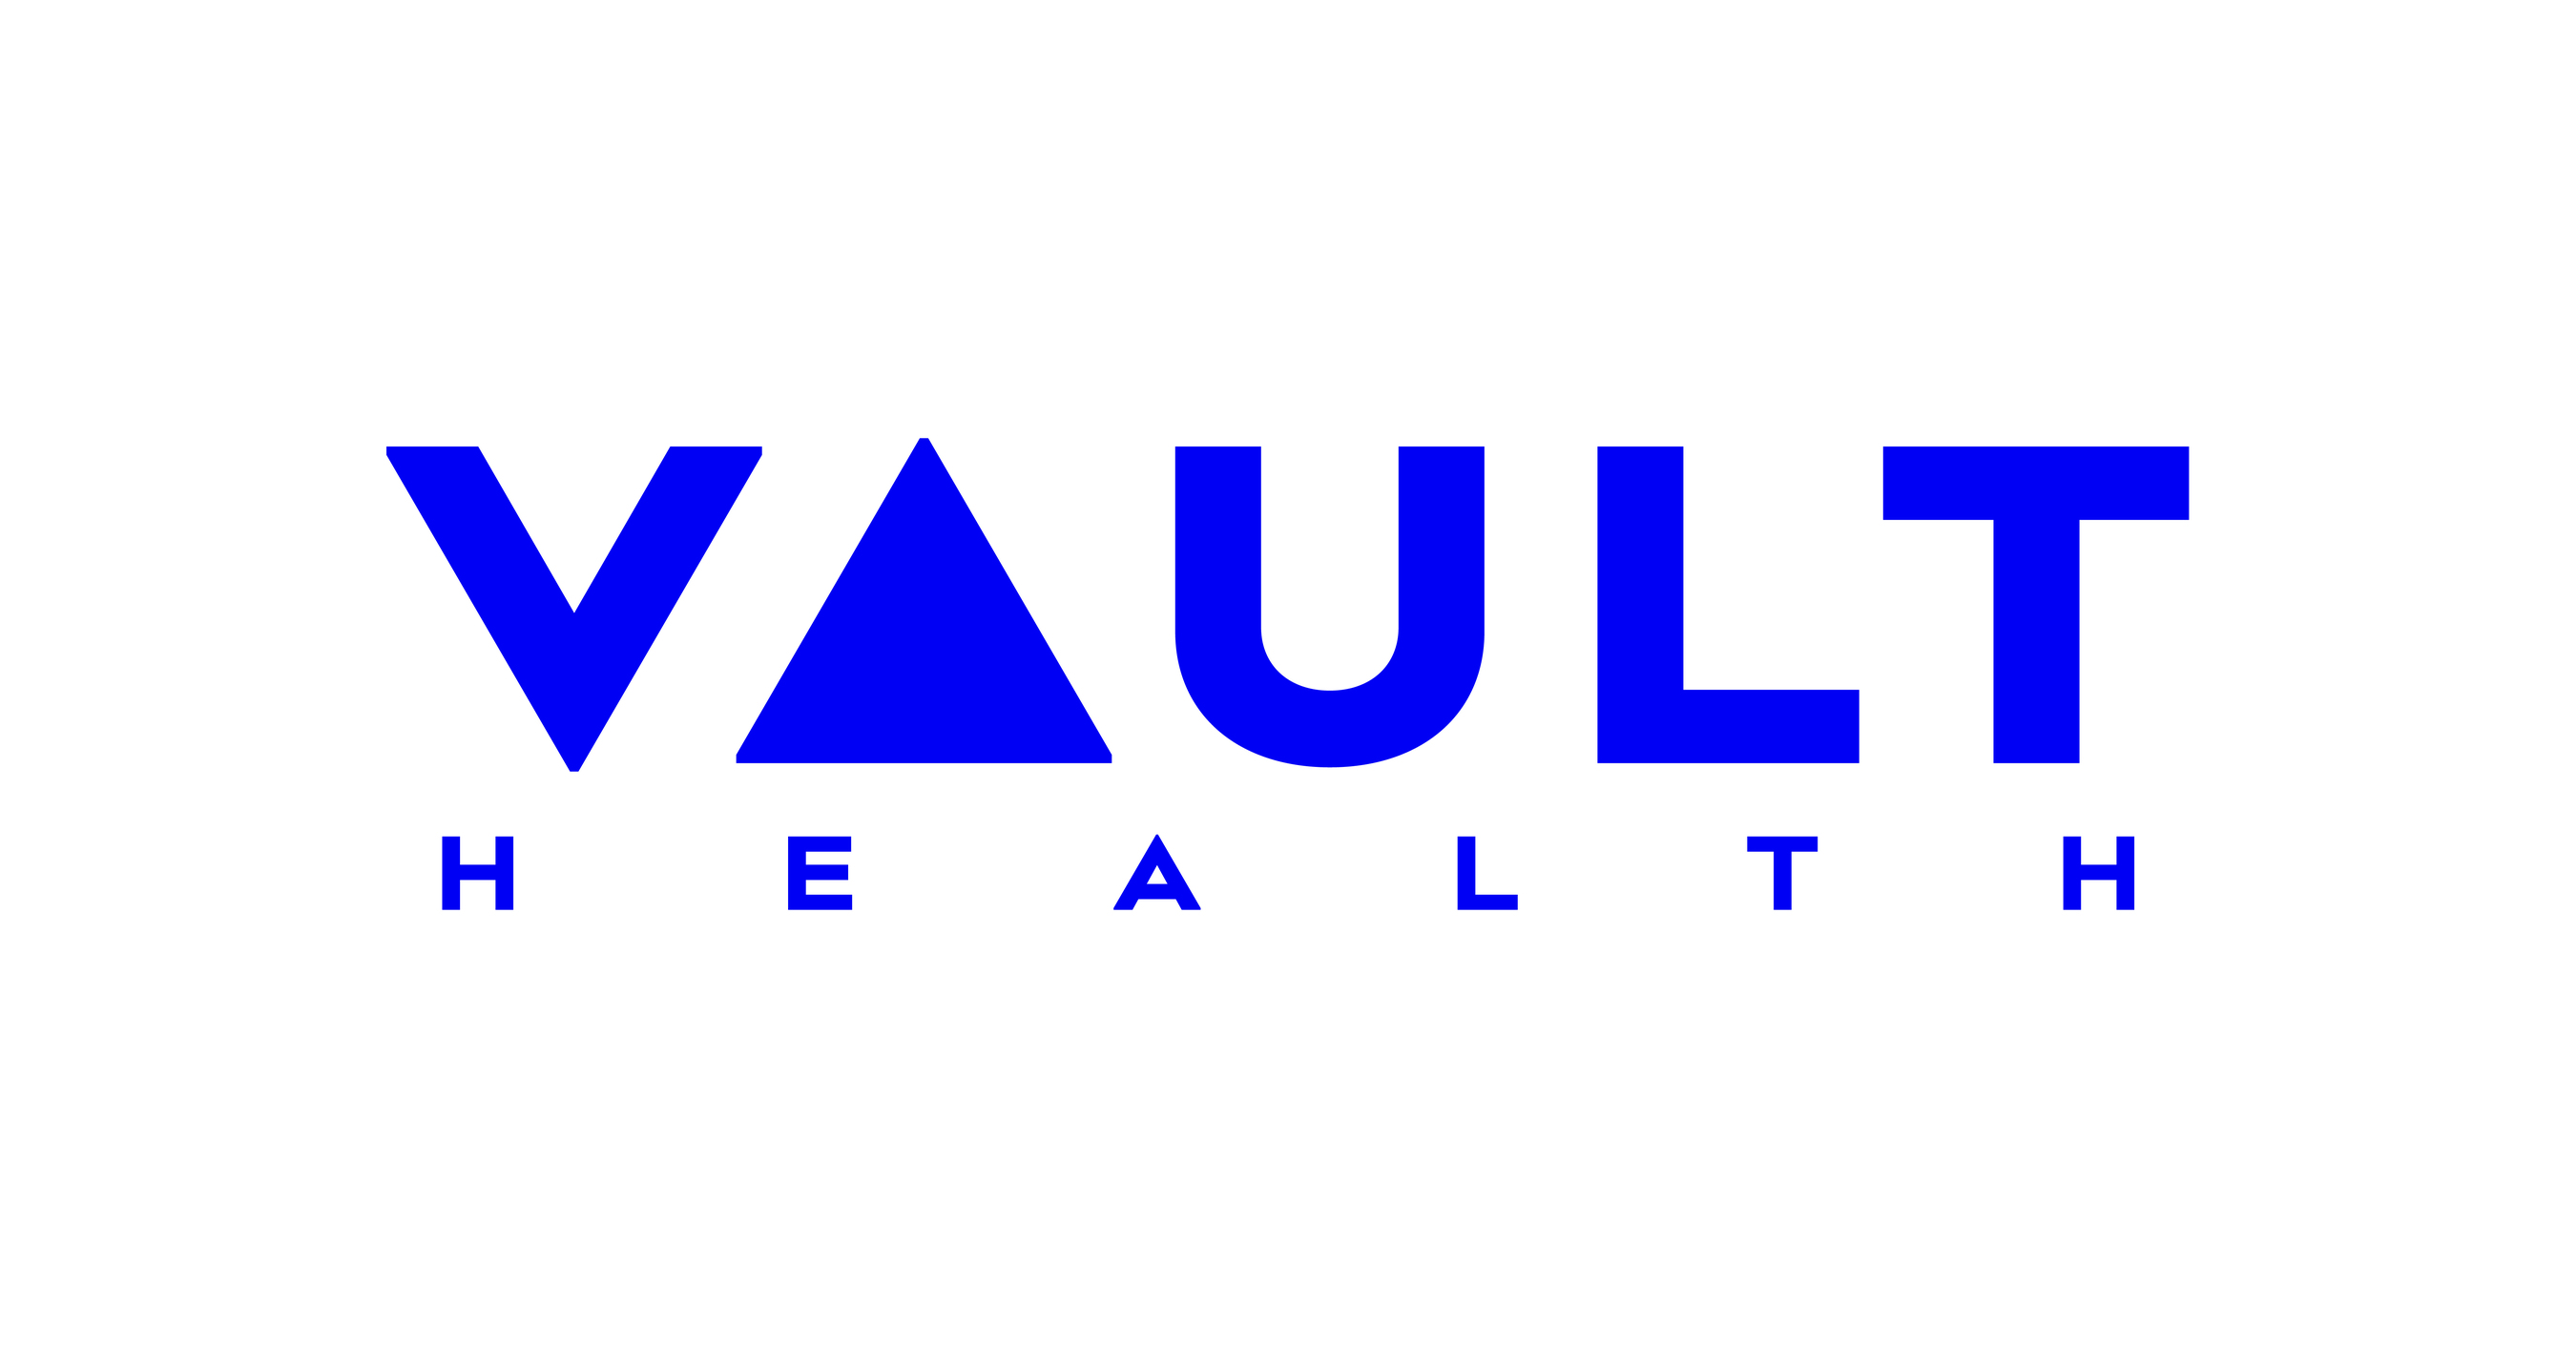 Vault Health